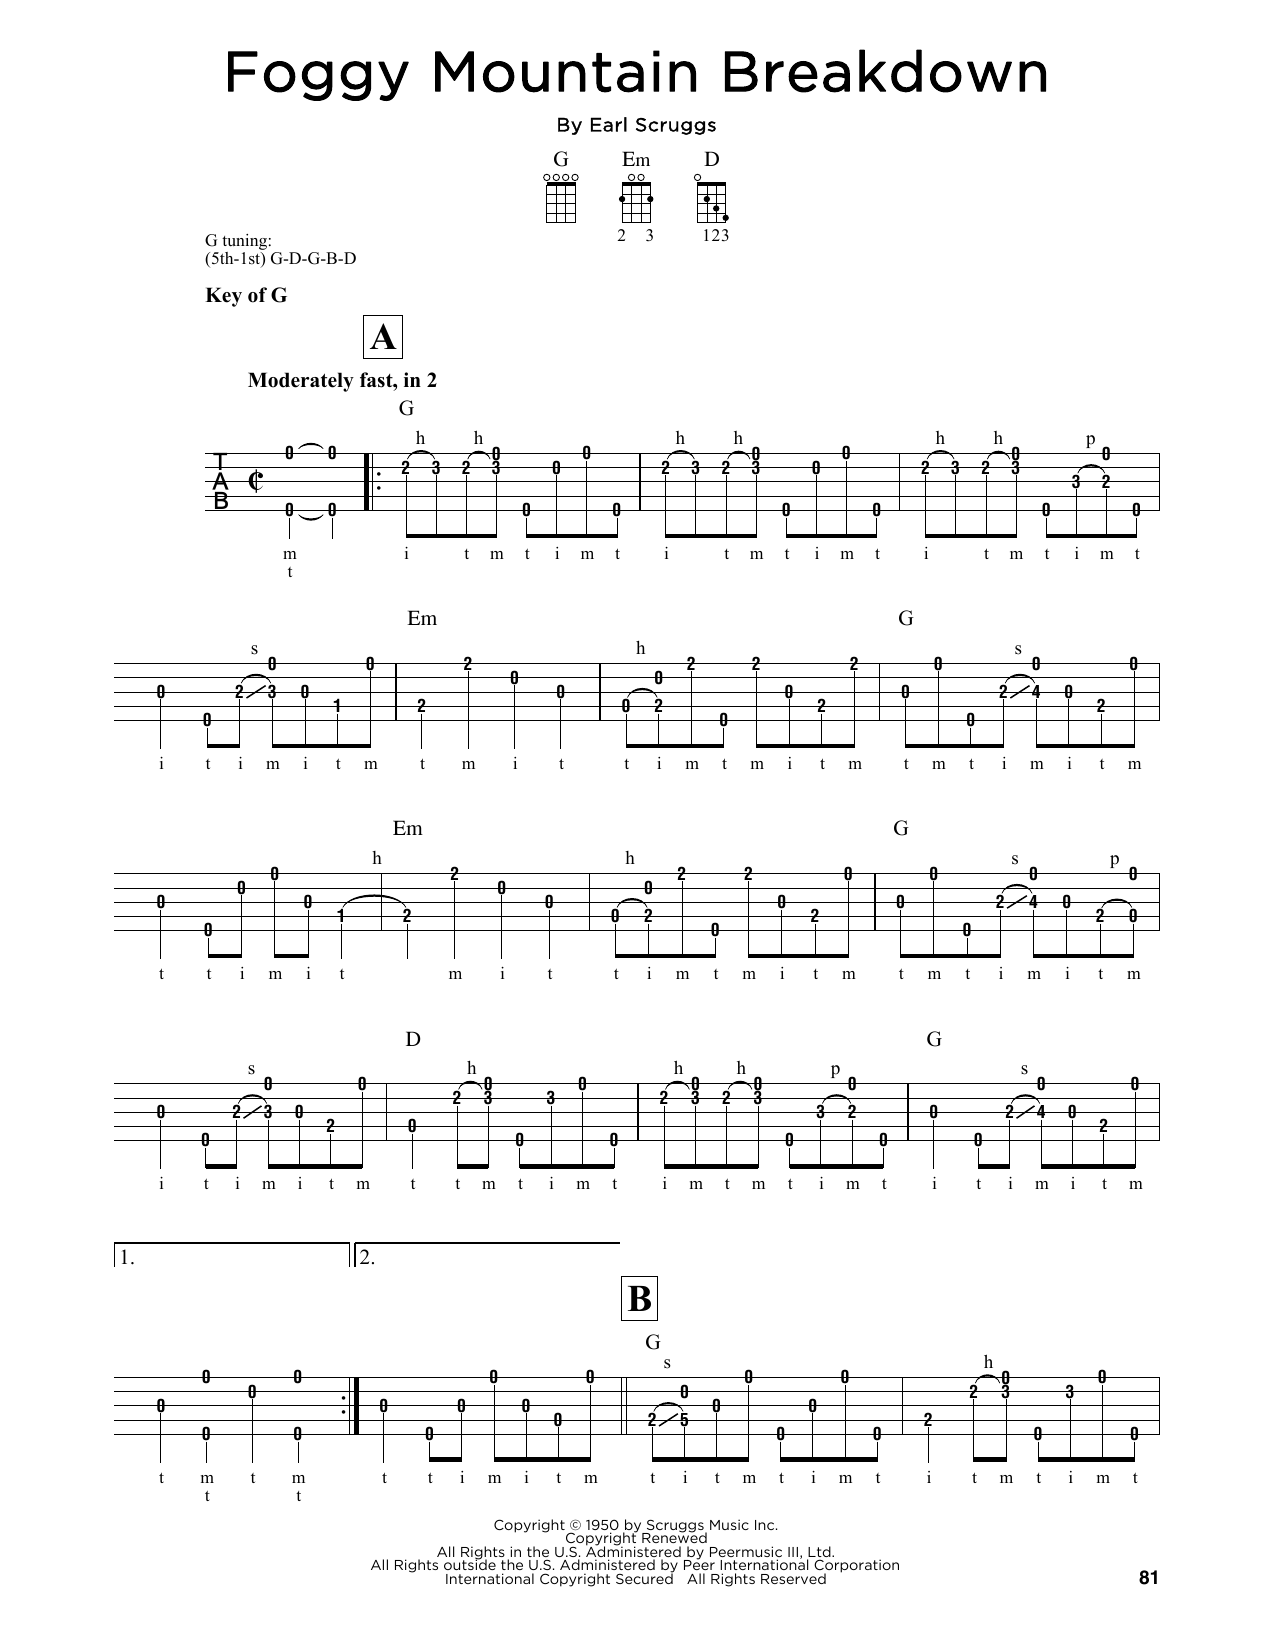 Lester Flatt & Earl Scruggs Foggy Mountain Breakdown Sheet Music Notes & Chords for Guitar Tab - Download or Print PDF